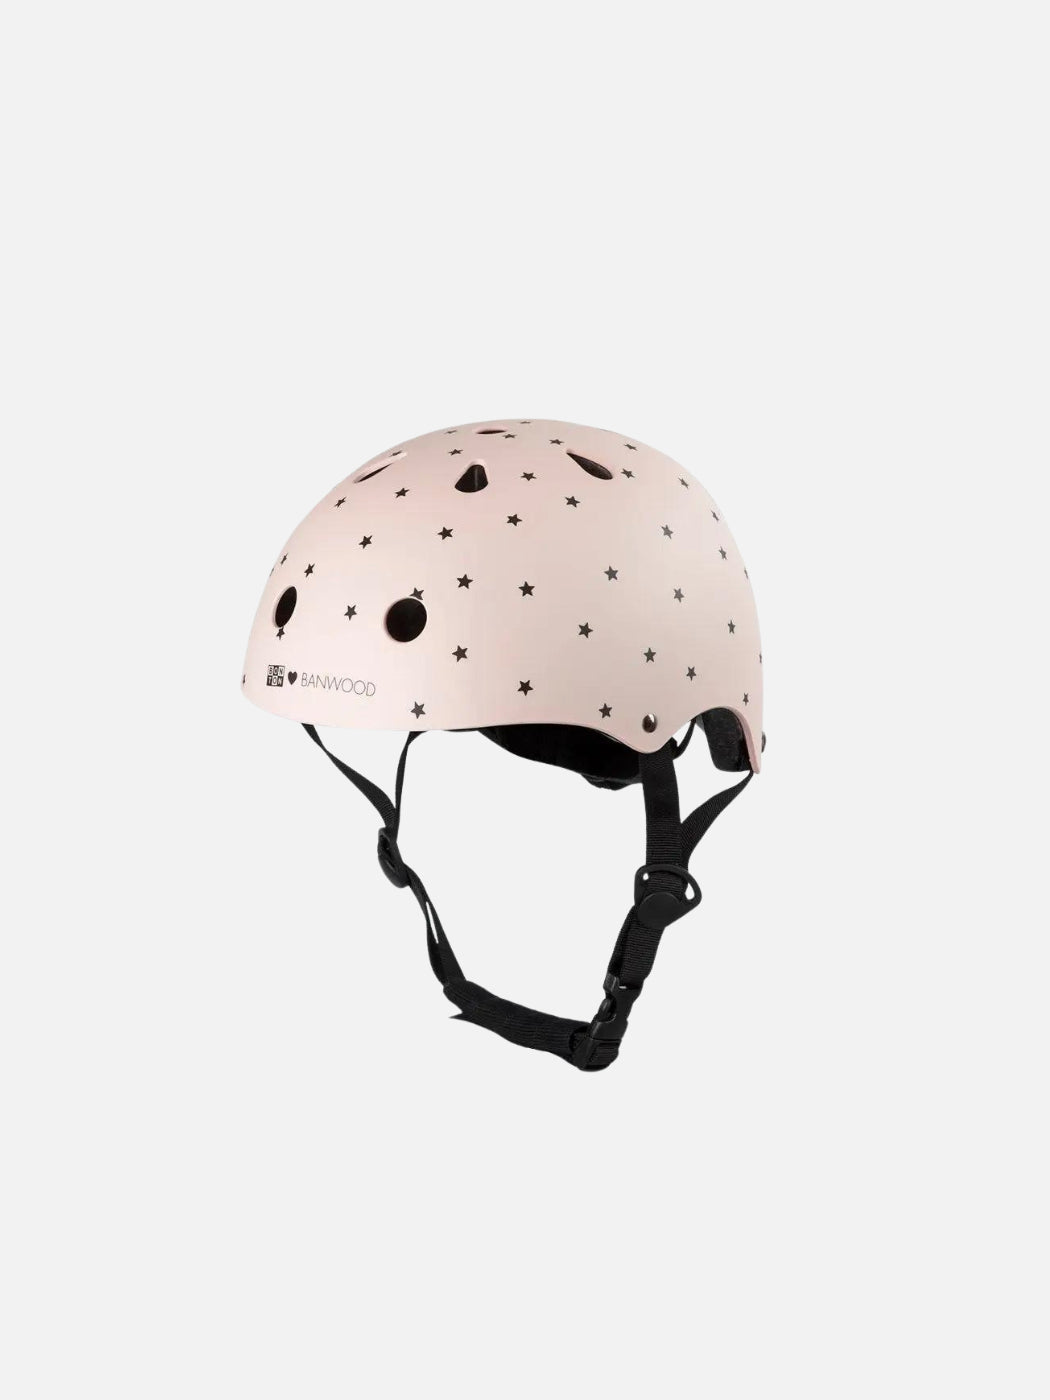 Banwood Classic Helmet - Extra Small